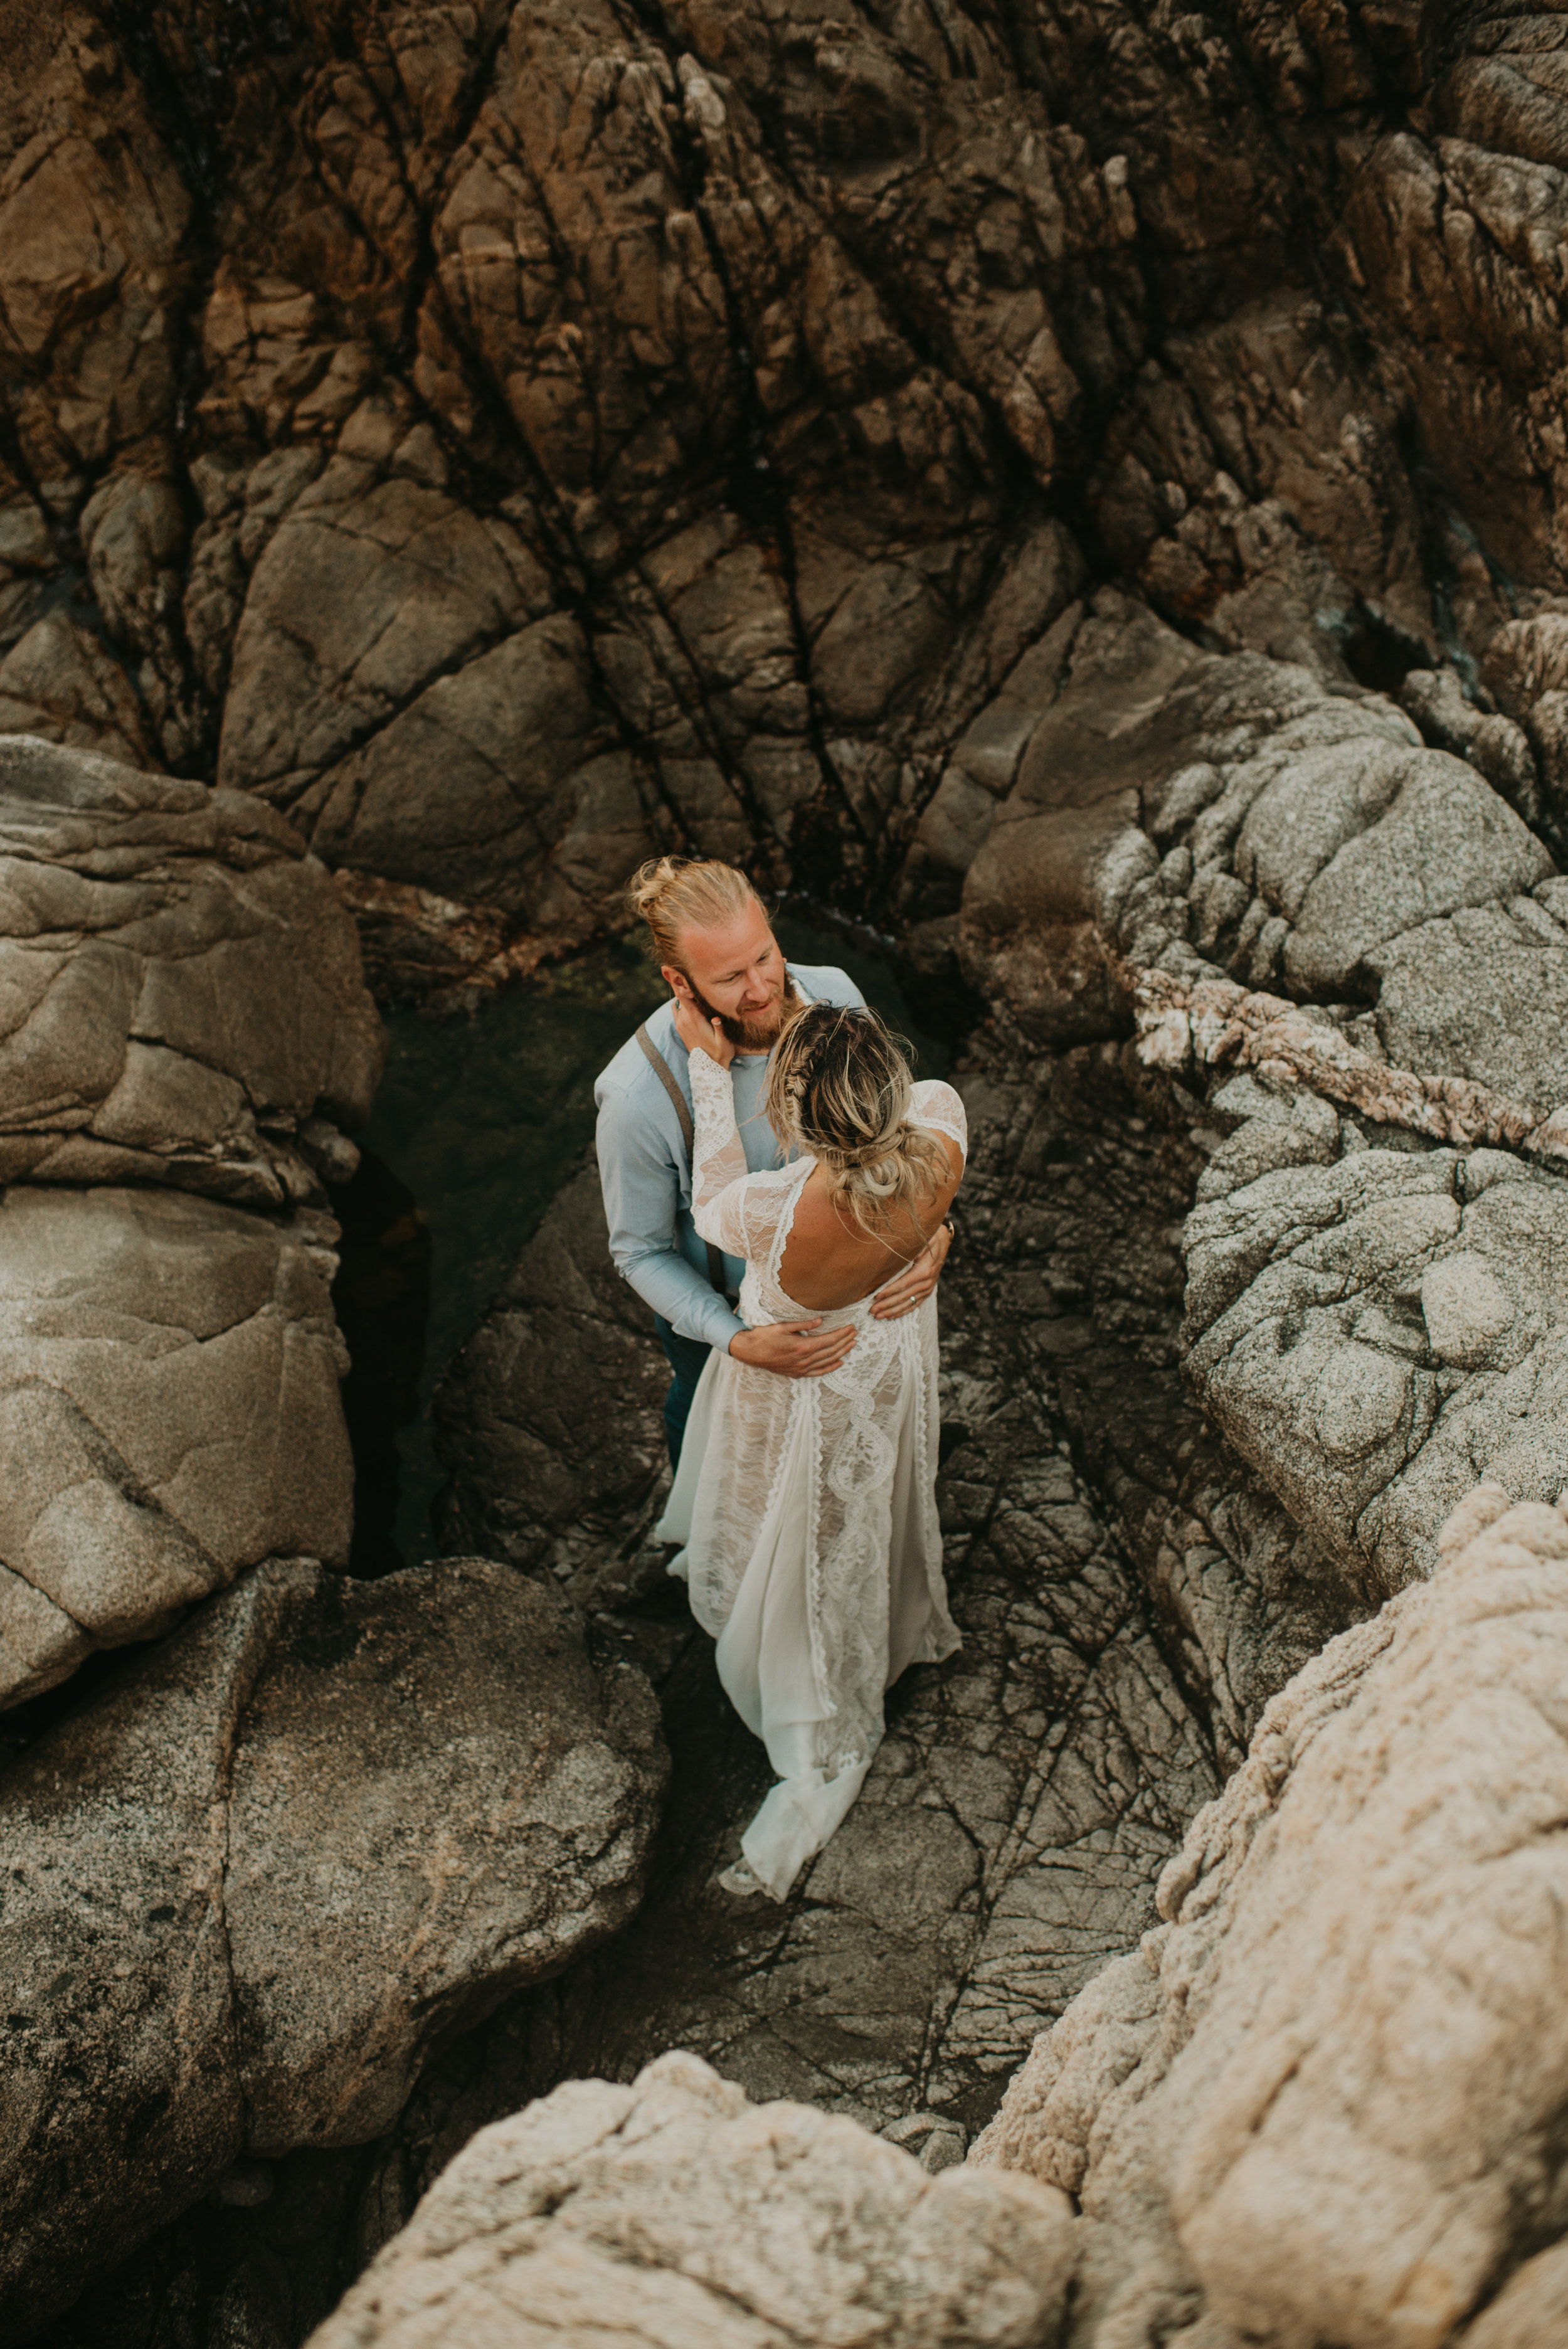 Joanna + Brian West Coast Intimate Adventure Wedding in Big Sur, CA by Seattle Wedding Photographer Kamra Fuller Photography